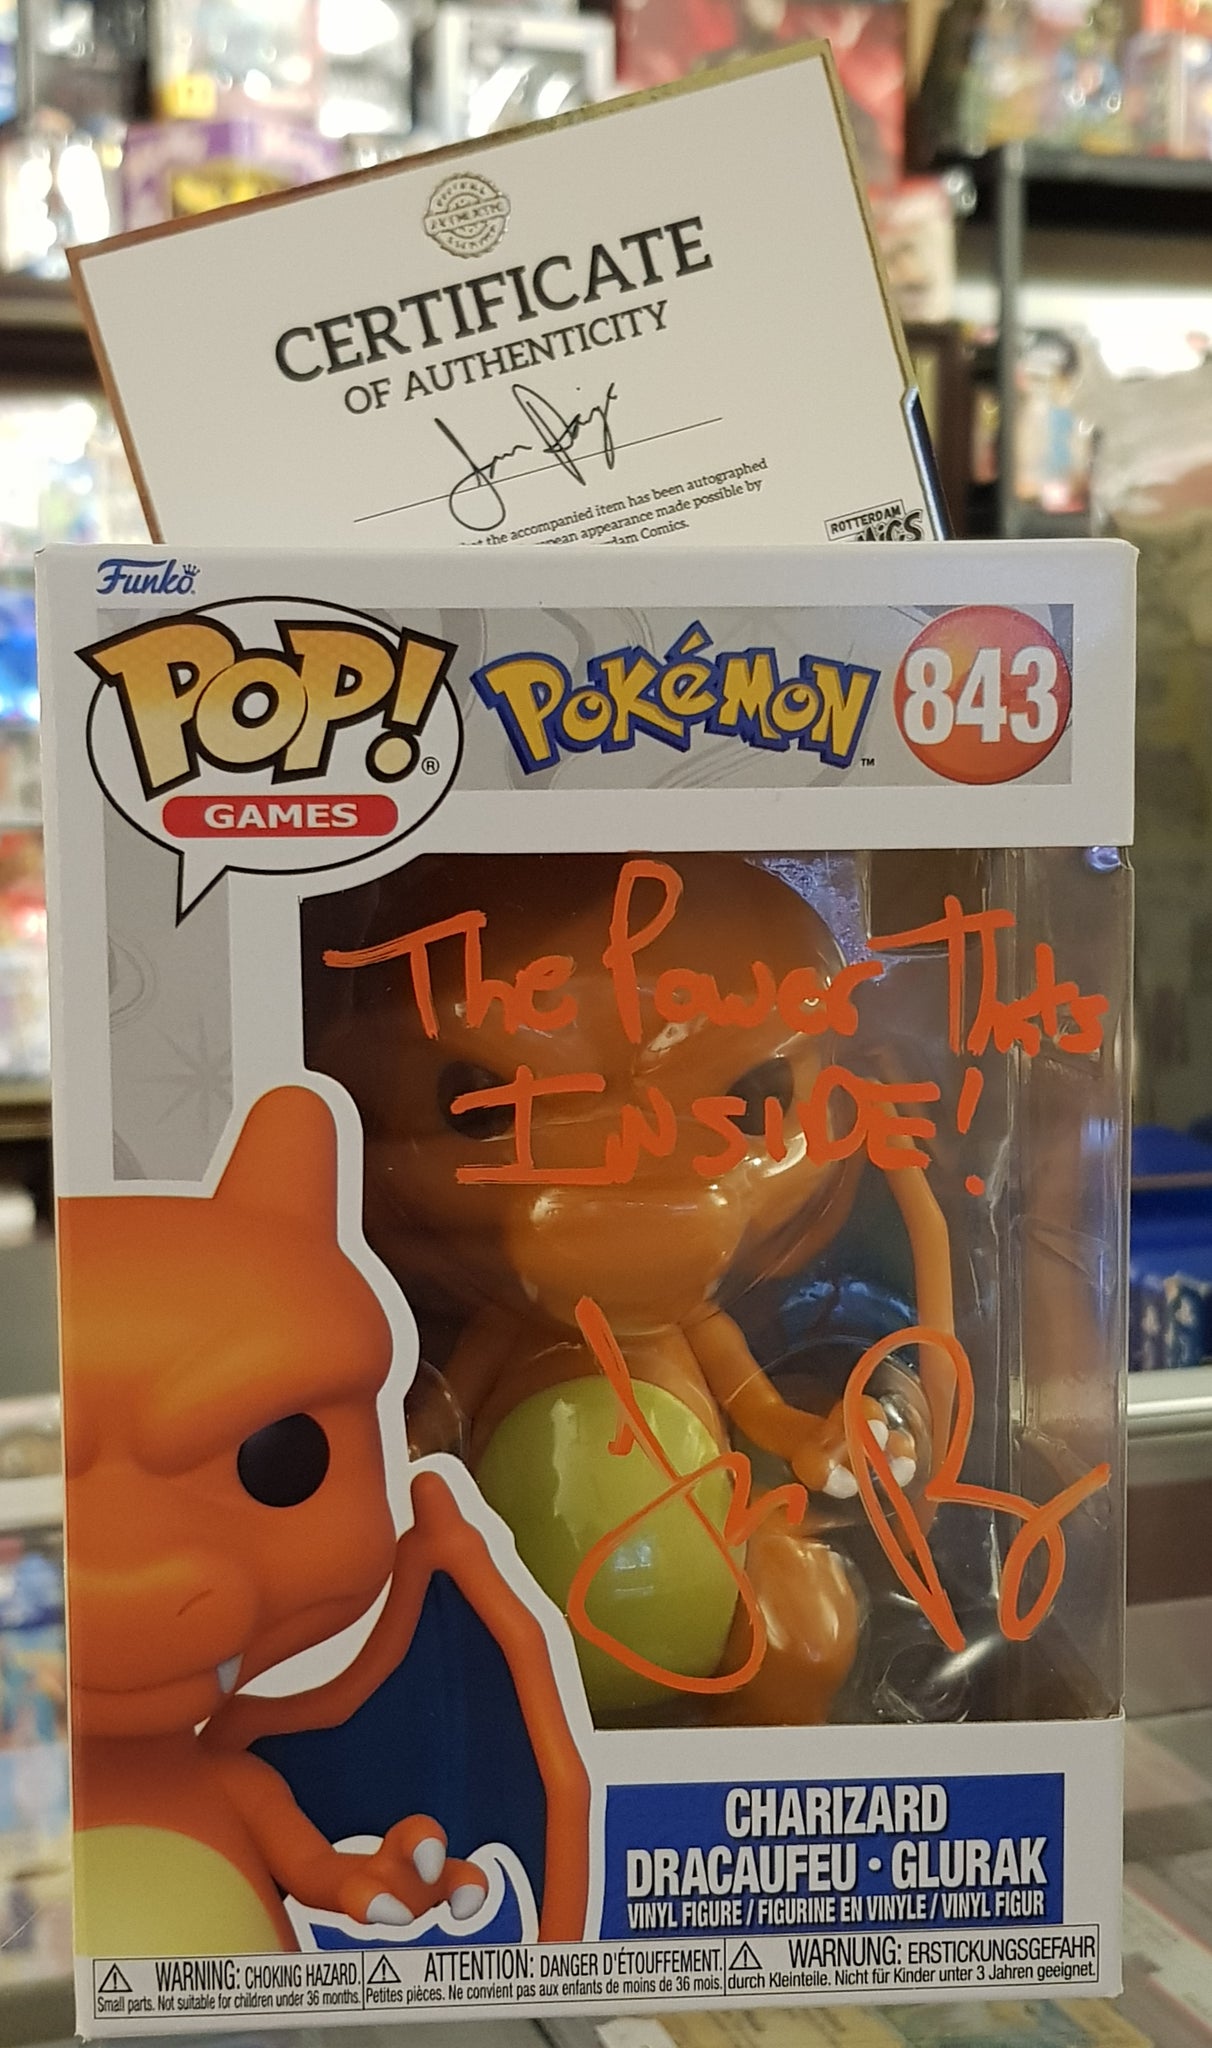 Funko Pop! Pokemon Charizard #843 Vinyl Figure (Signed by Jason Paige)